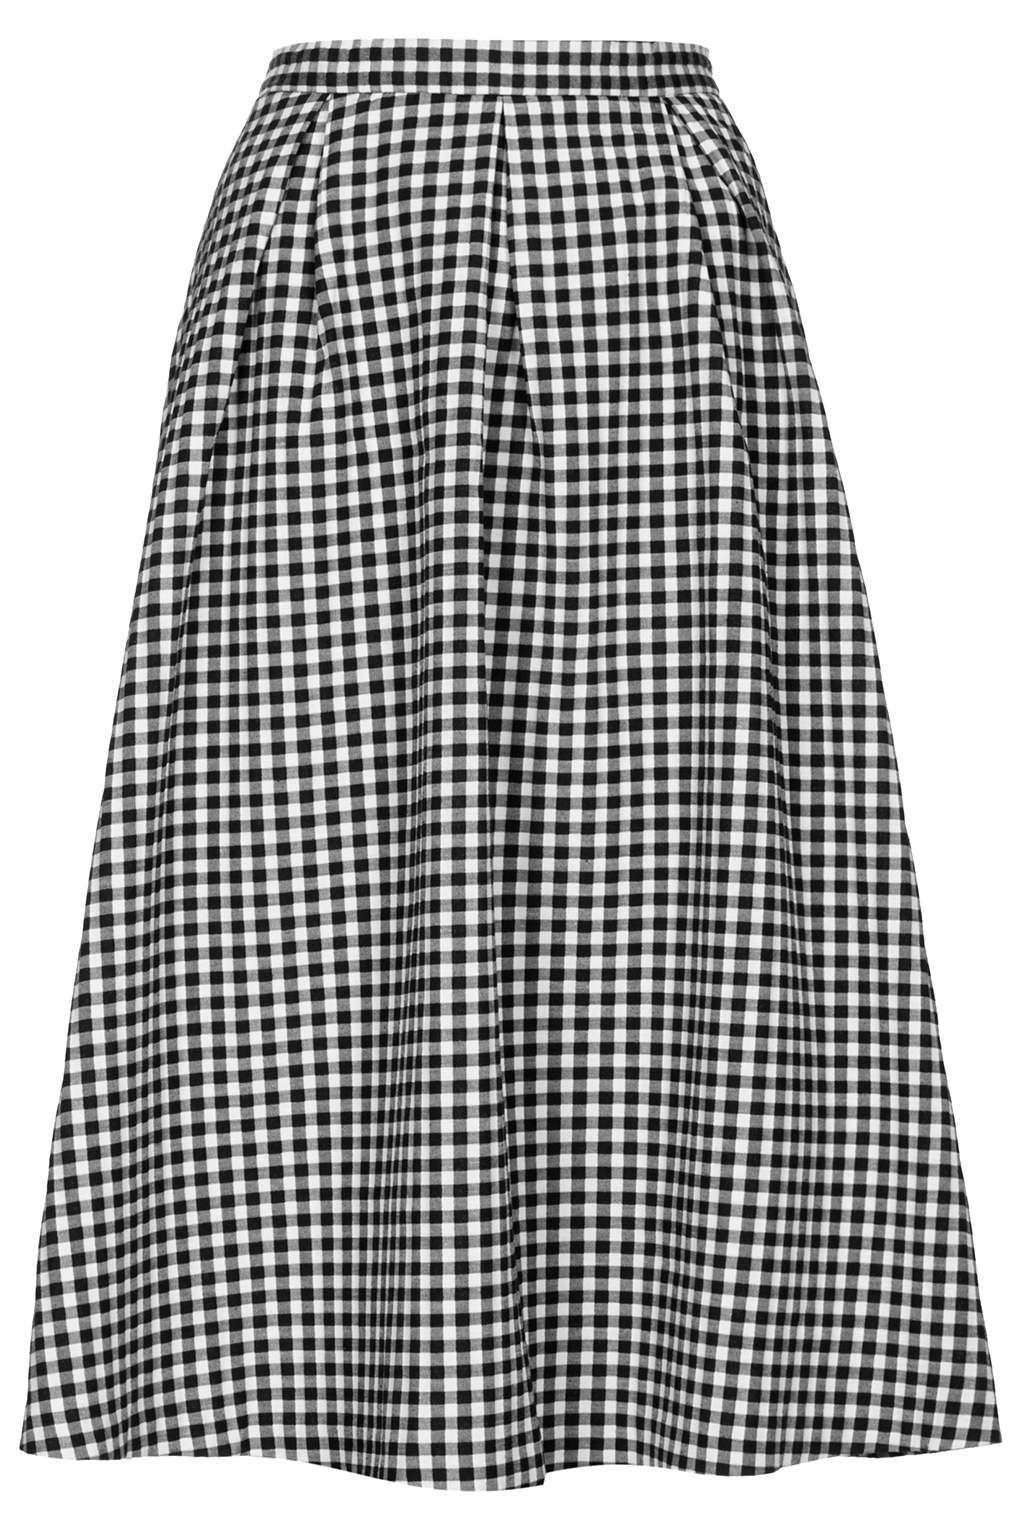 Topshop Gingham Calf Midi Skirt in Black | Lyst